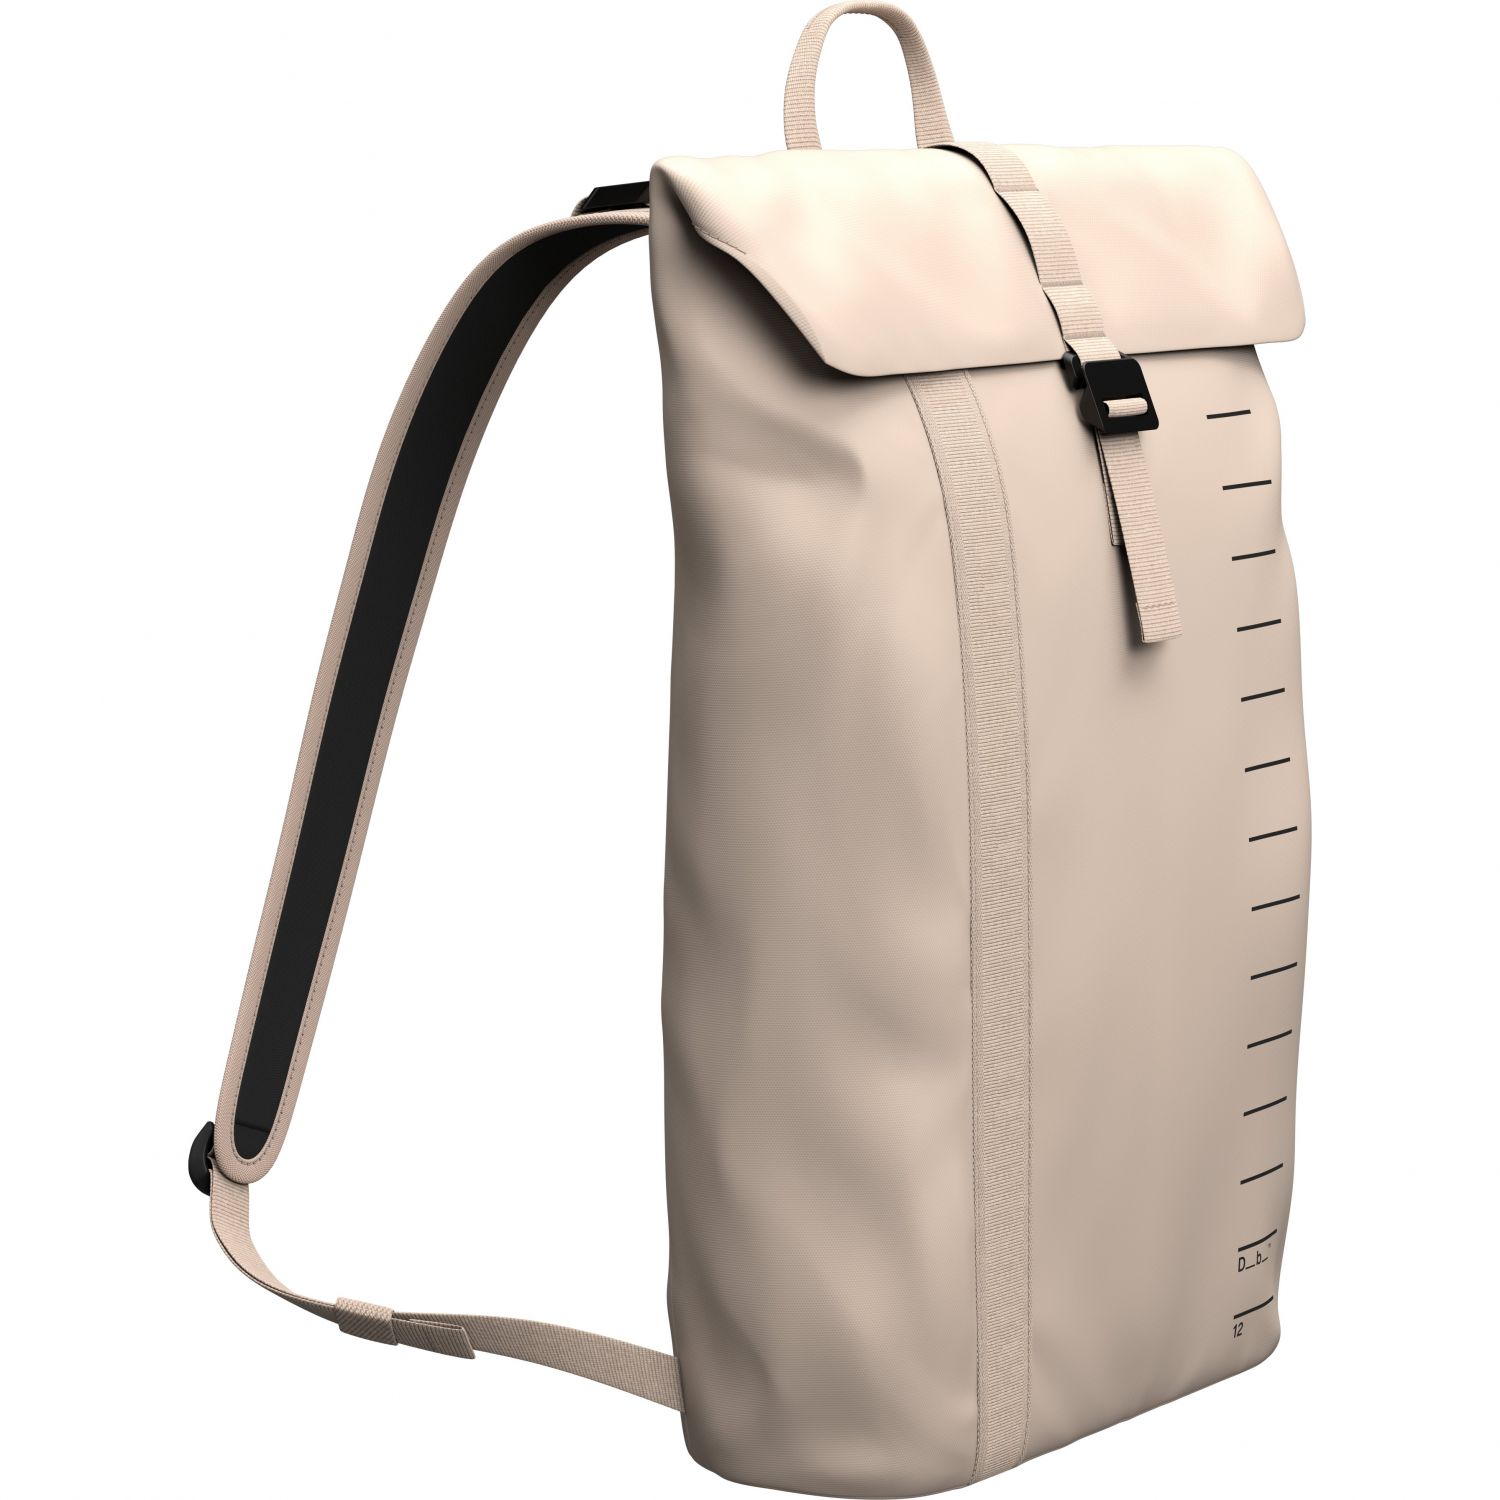 Db Essential Backpack, 12L, fogbow beige